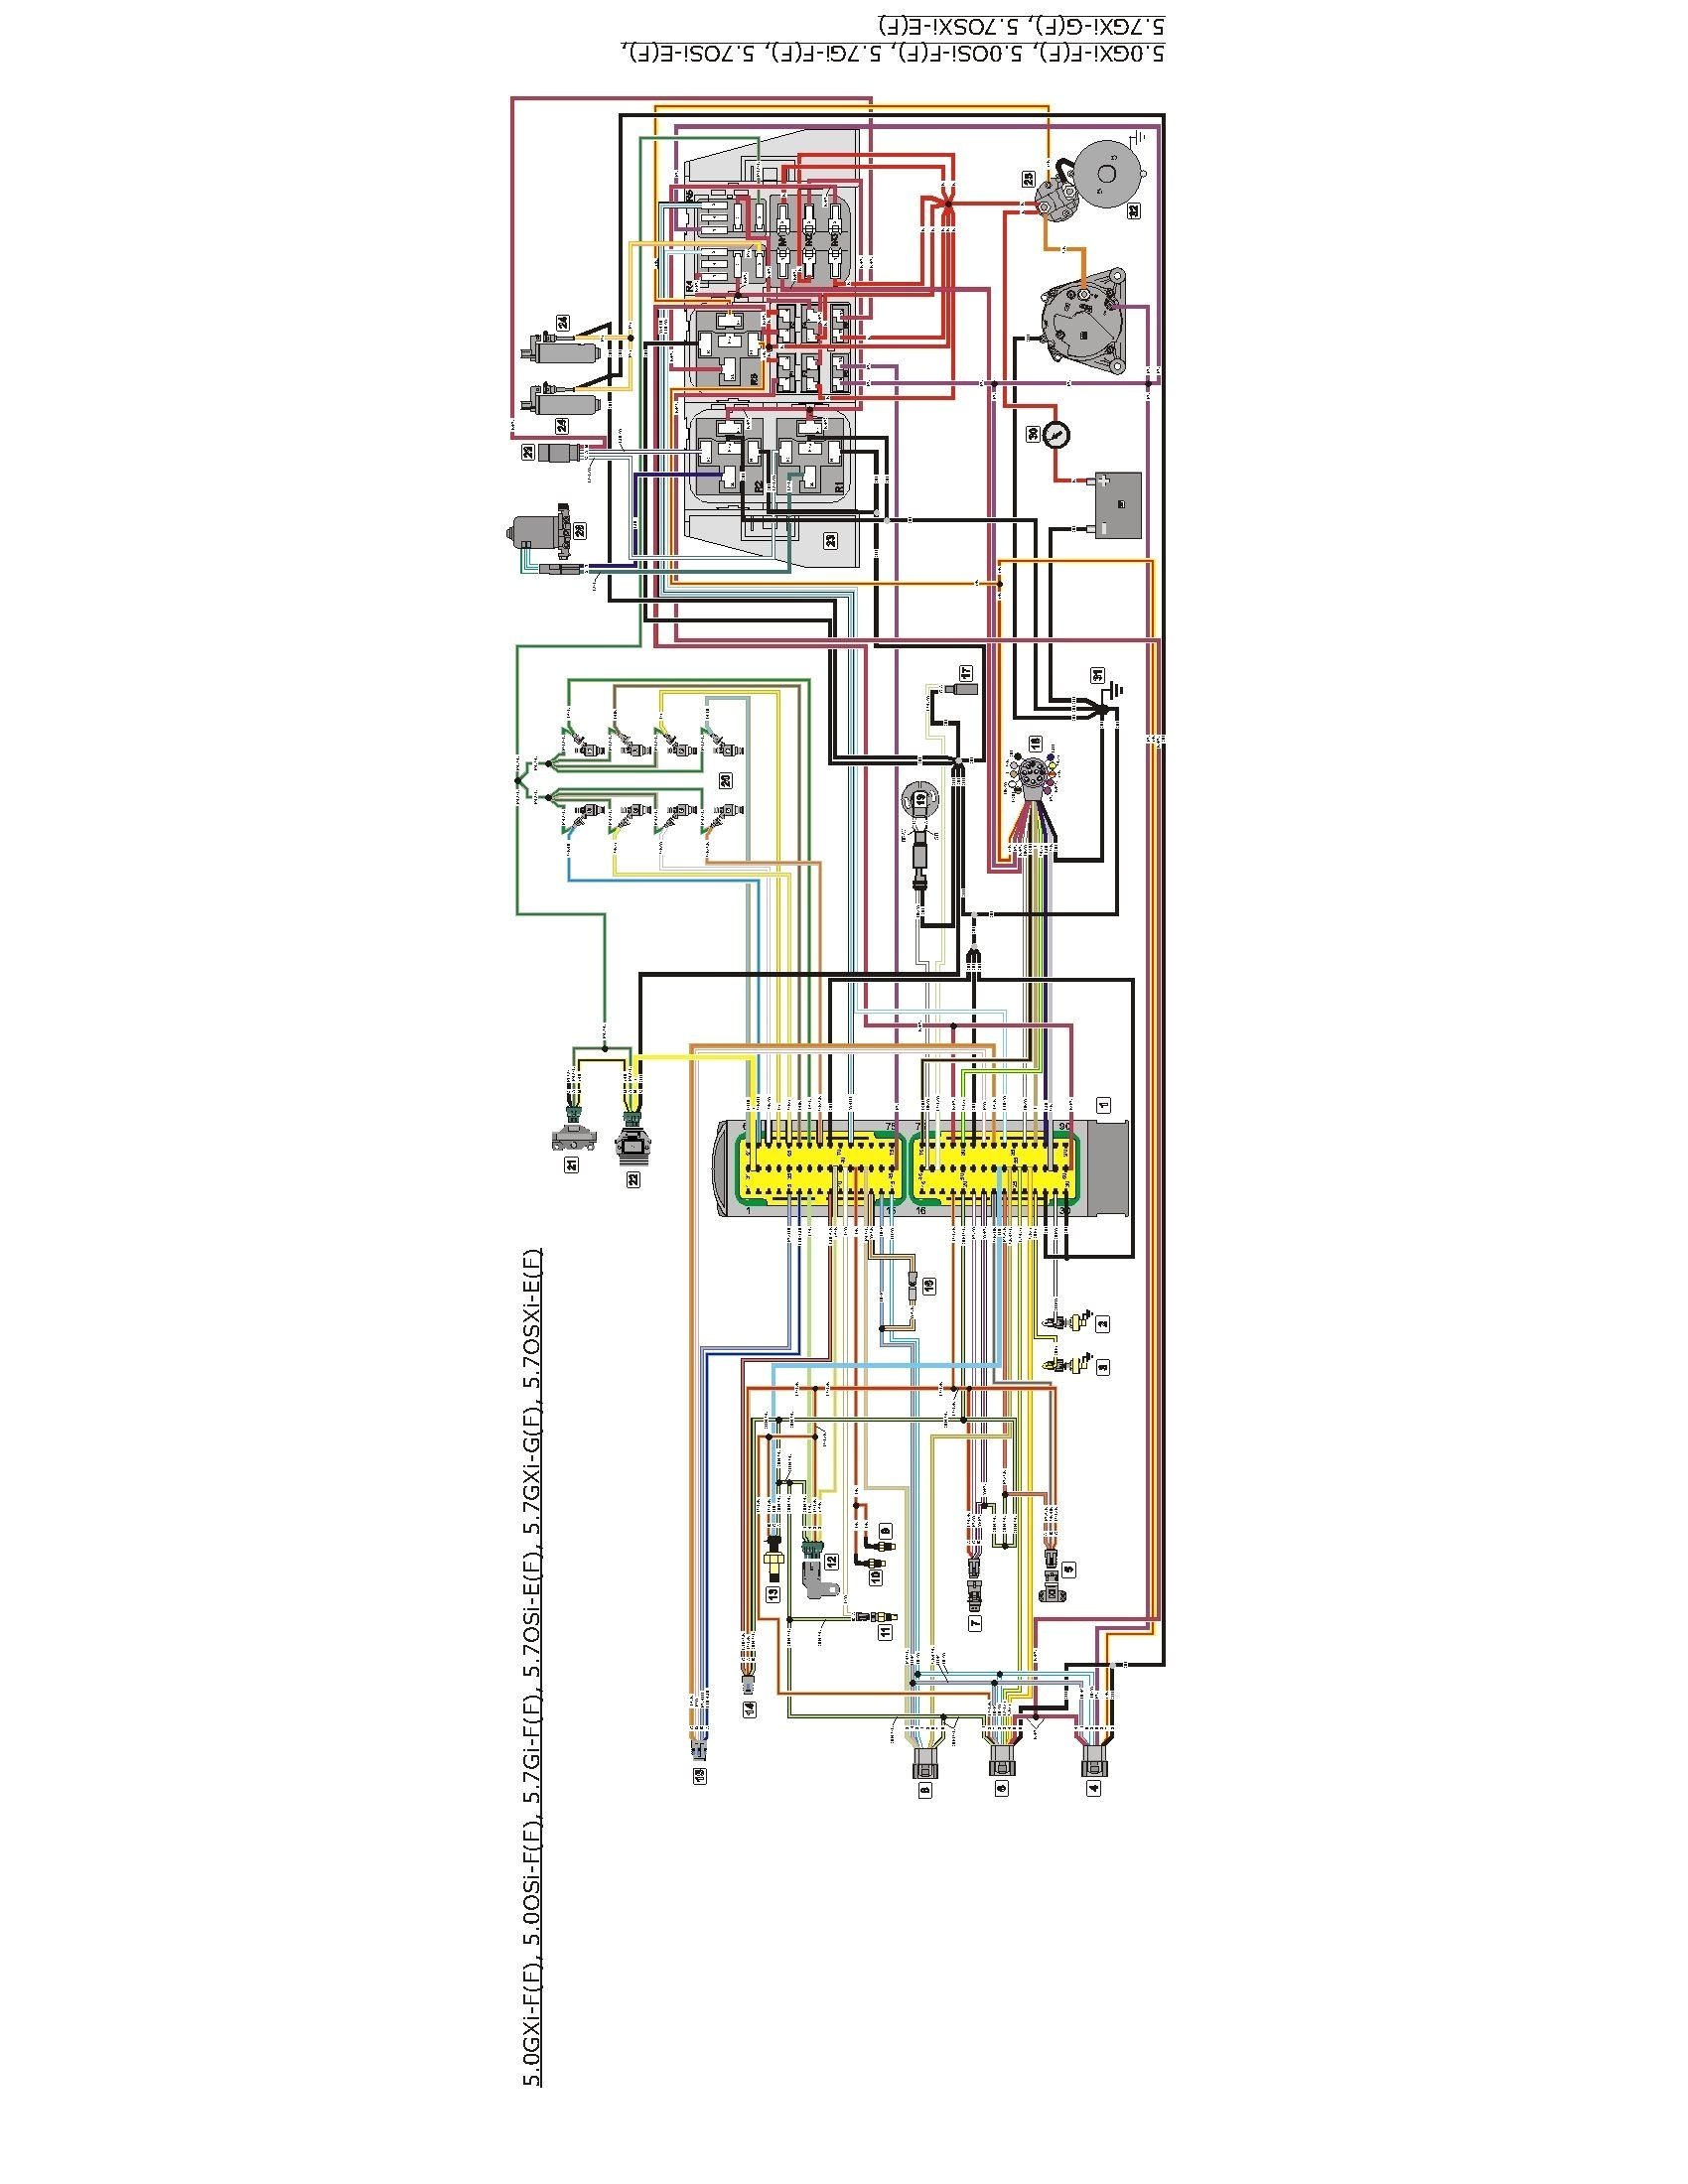 volvo penta 3 0 engine diagram wiring diagram used 3 0 volvo penta wiring diagram